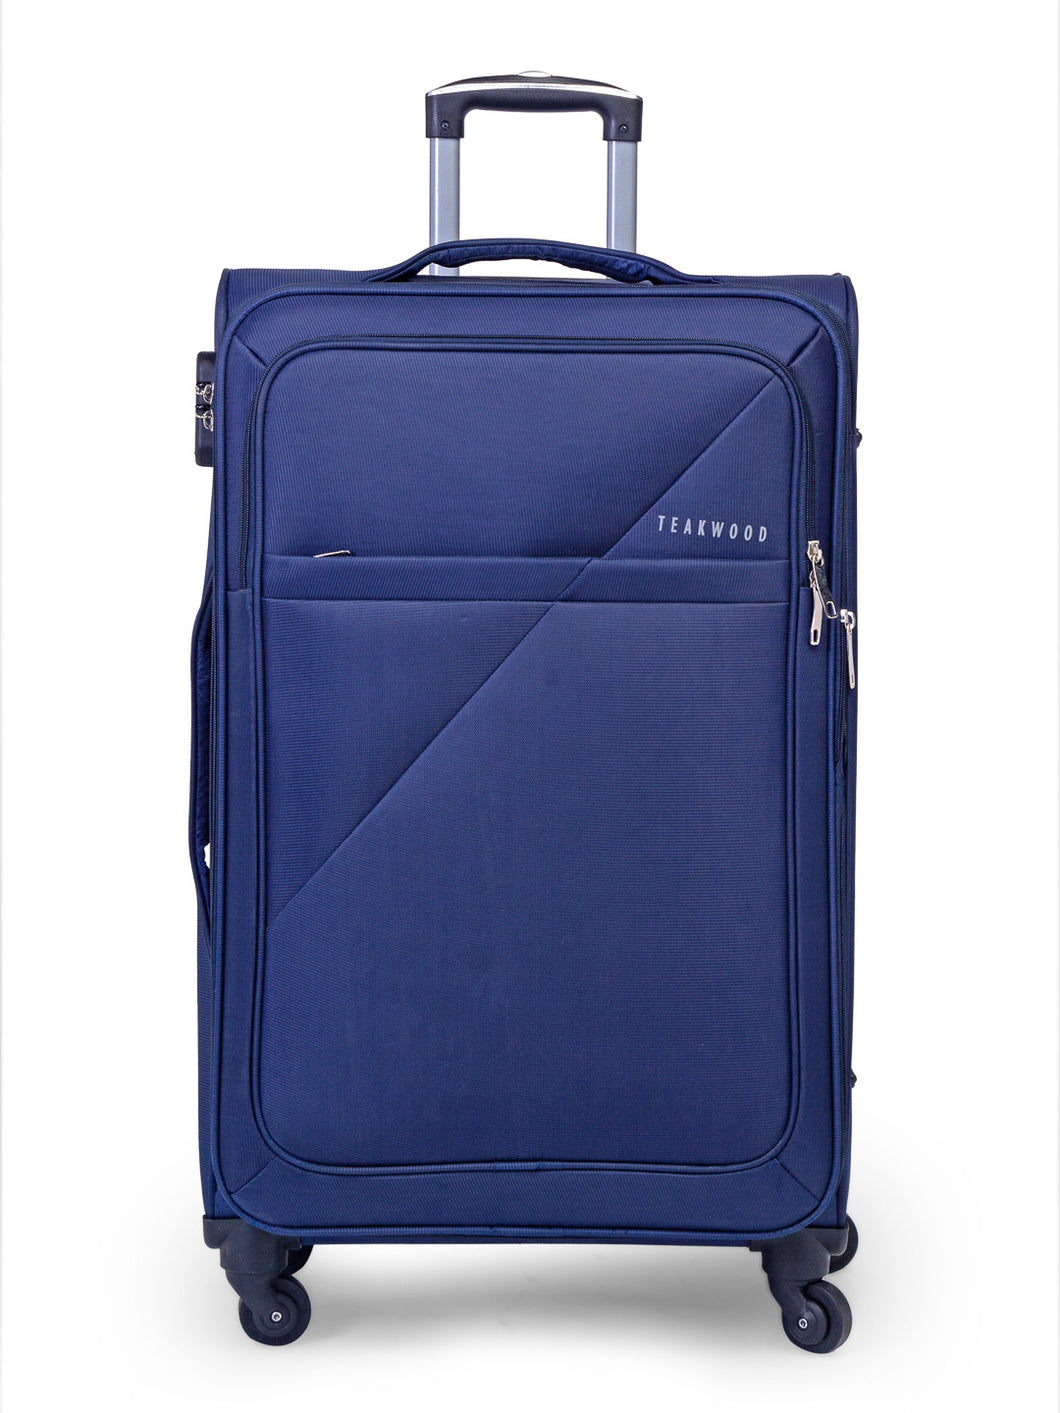 Teakwood Blue Trolley Bag (Medium)